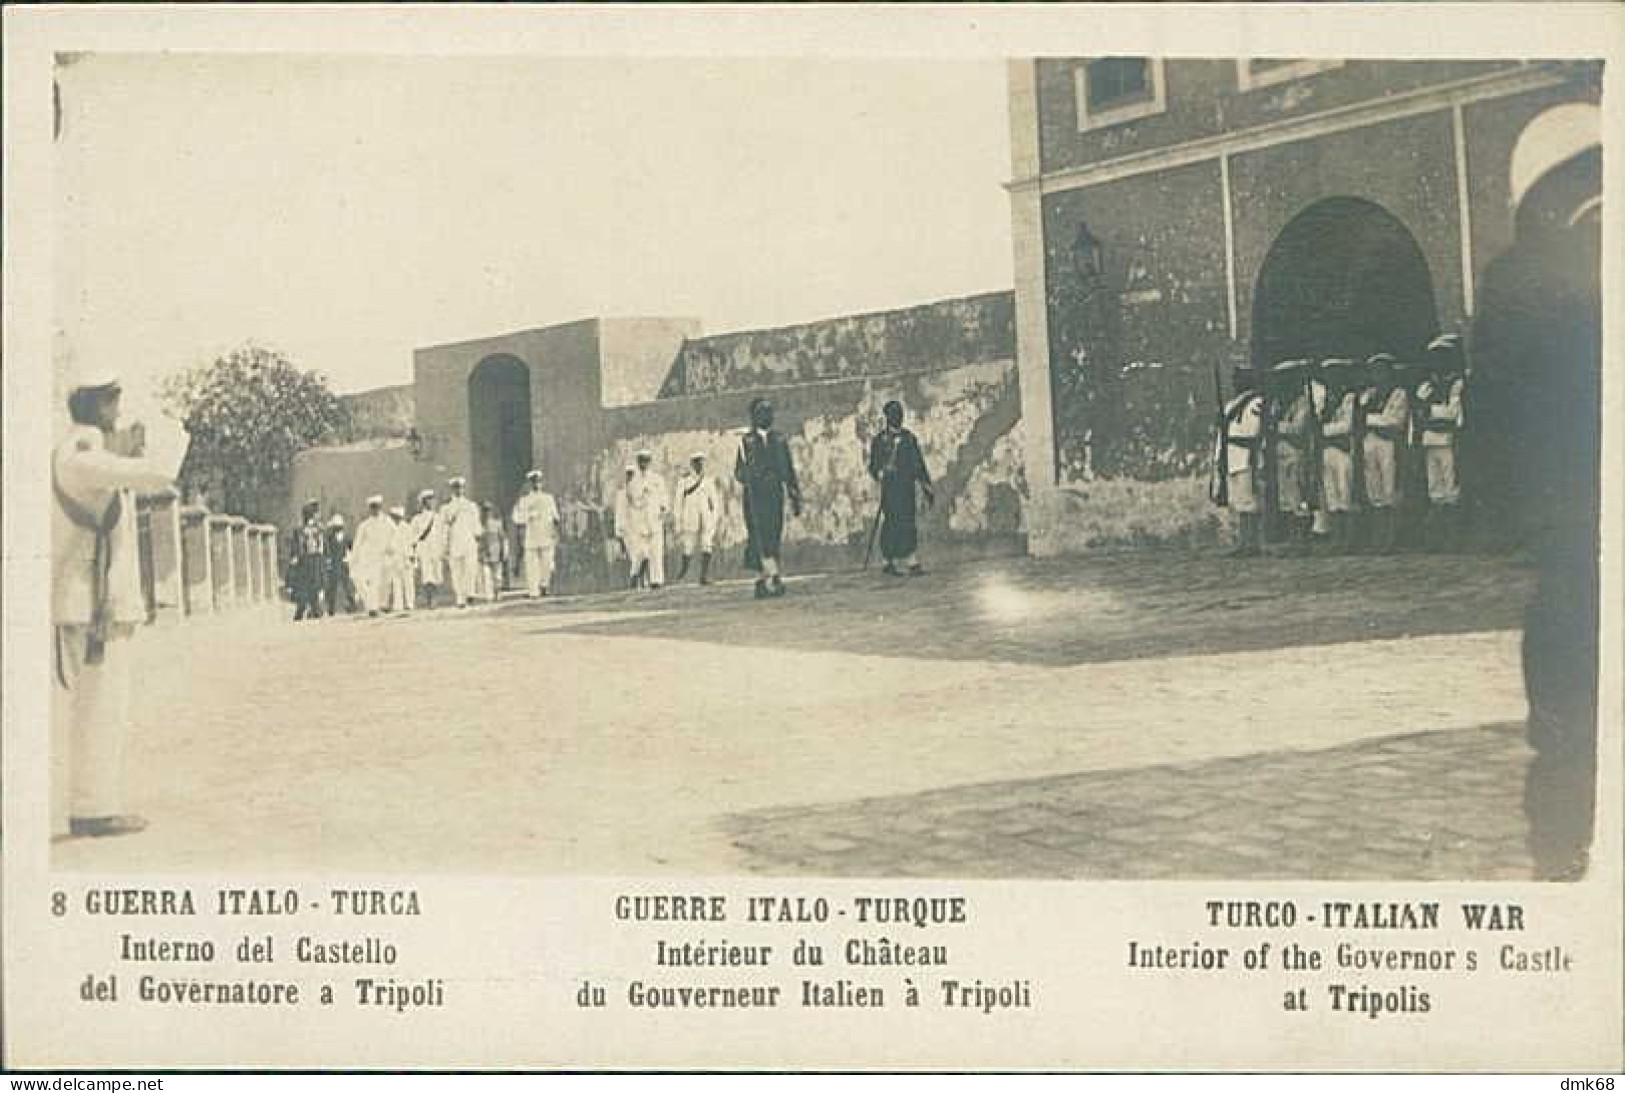 LIBYA / LIBIA - TURKEY / ITALY WAR - INTERIOR OF THE GOVERNOR'S CASTLE AT TRIPOLI - RPPC POSTCARD 1910s (12596) - Libya